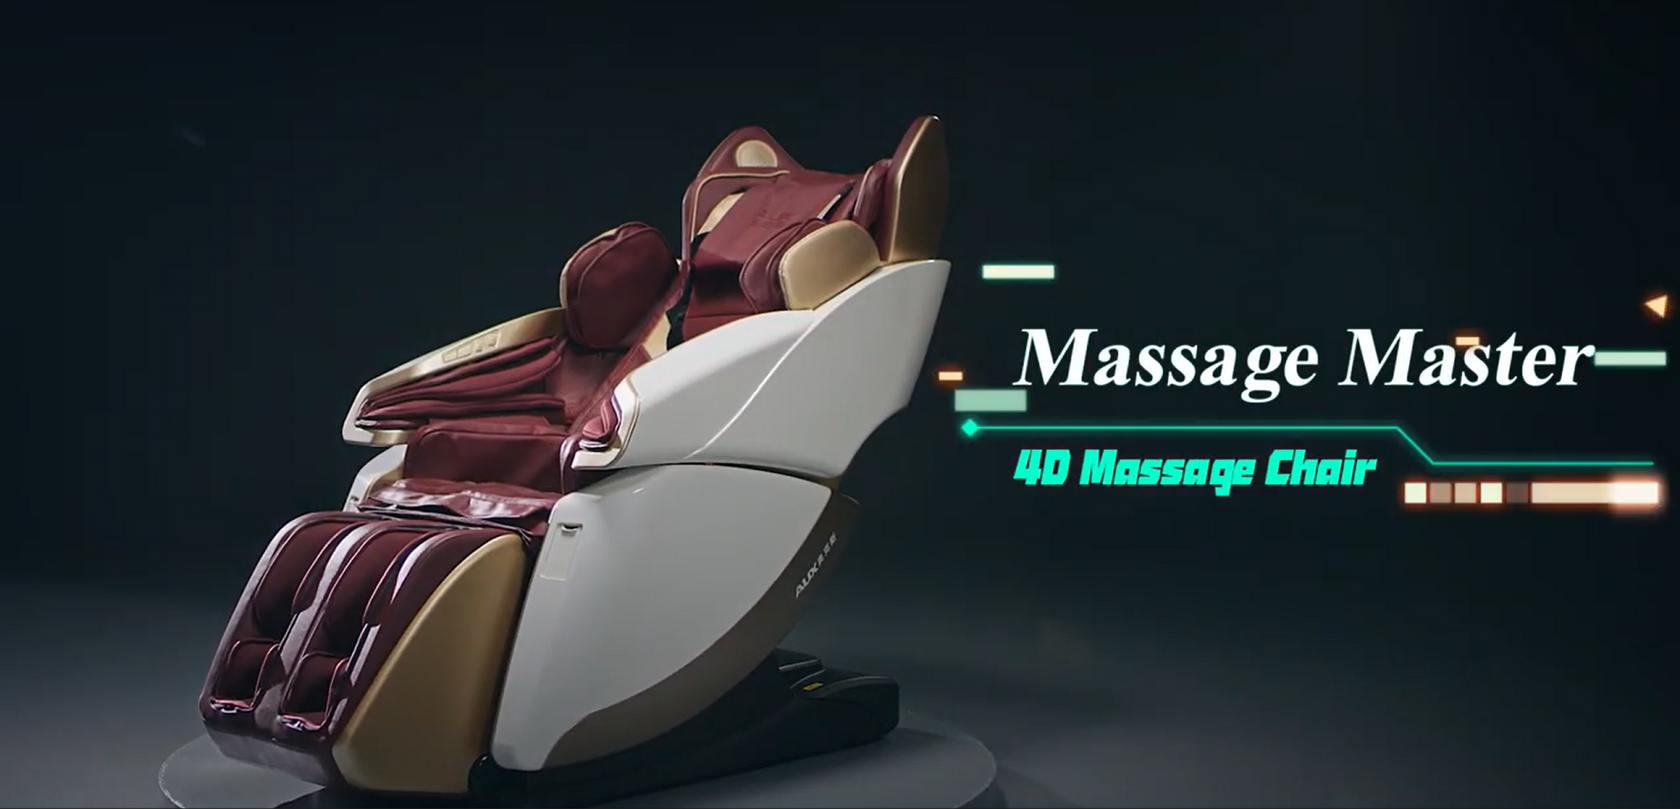 Massage Master 4D Zen Pod Massage Chair Video Luxury and Comfort Combined